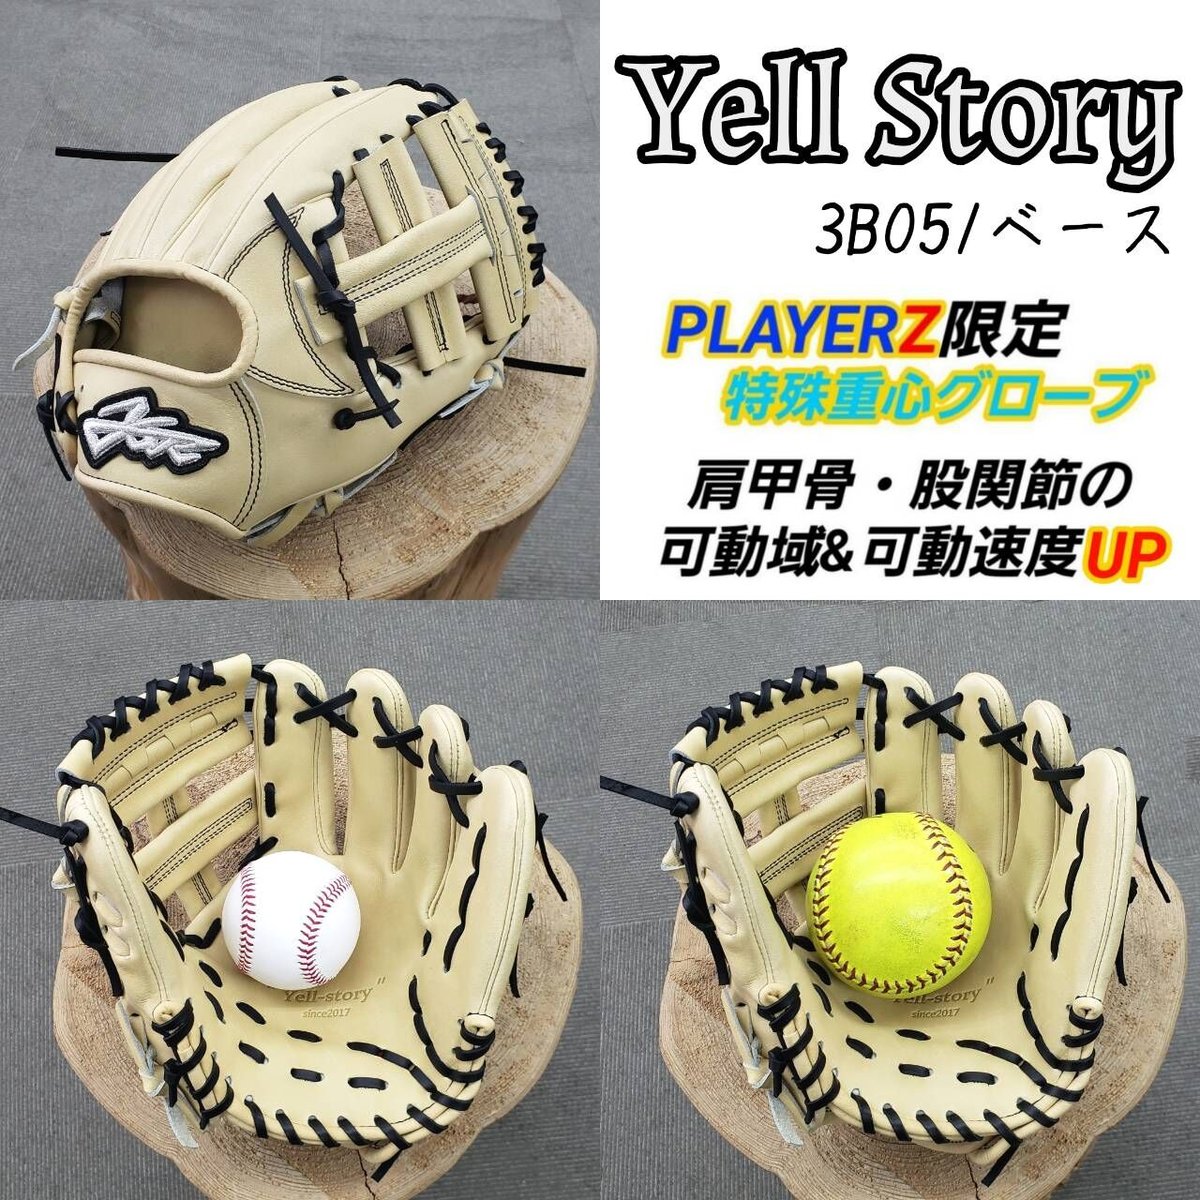 Yell-story エールストーリー 特殊重心グローブ 硬式用 内野用 野球